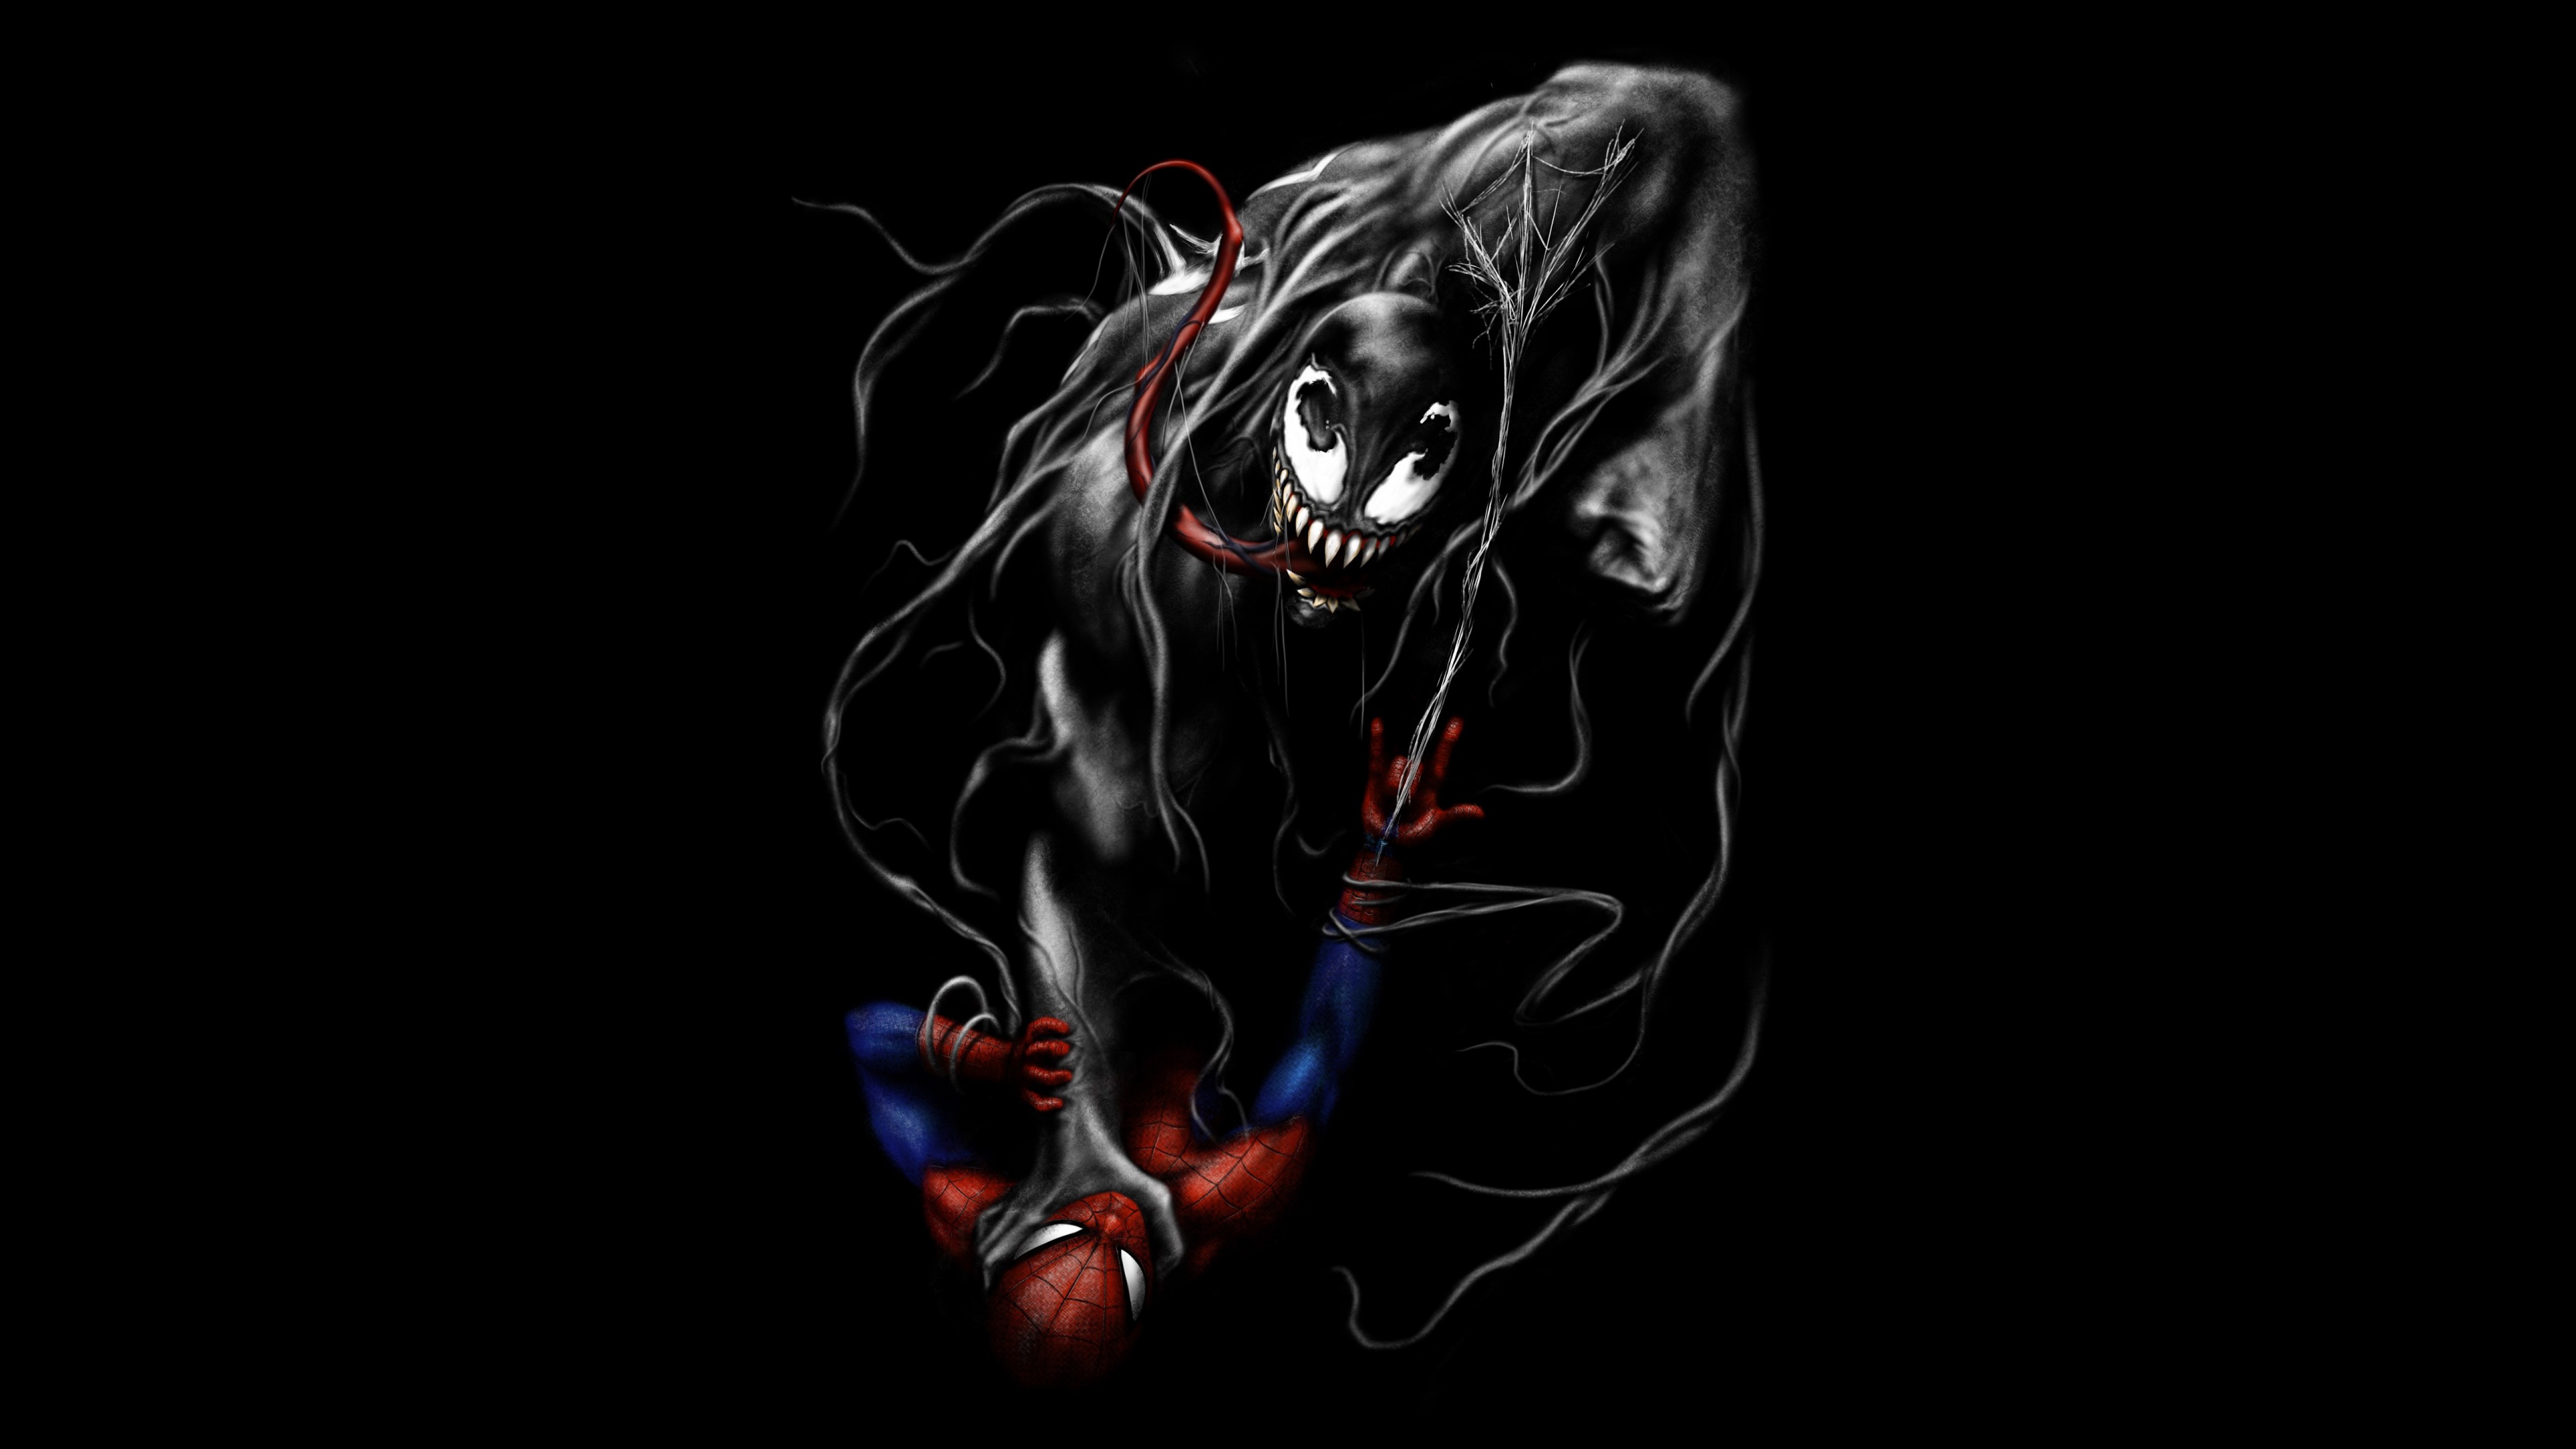 Spider Man Vs Venom 4k Ultra Hd Wallpaper Background Image